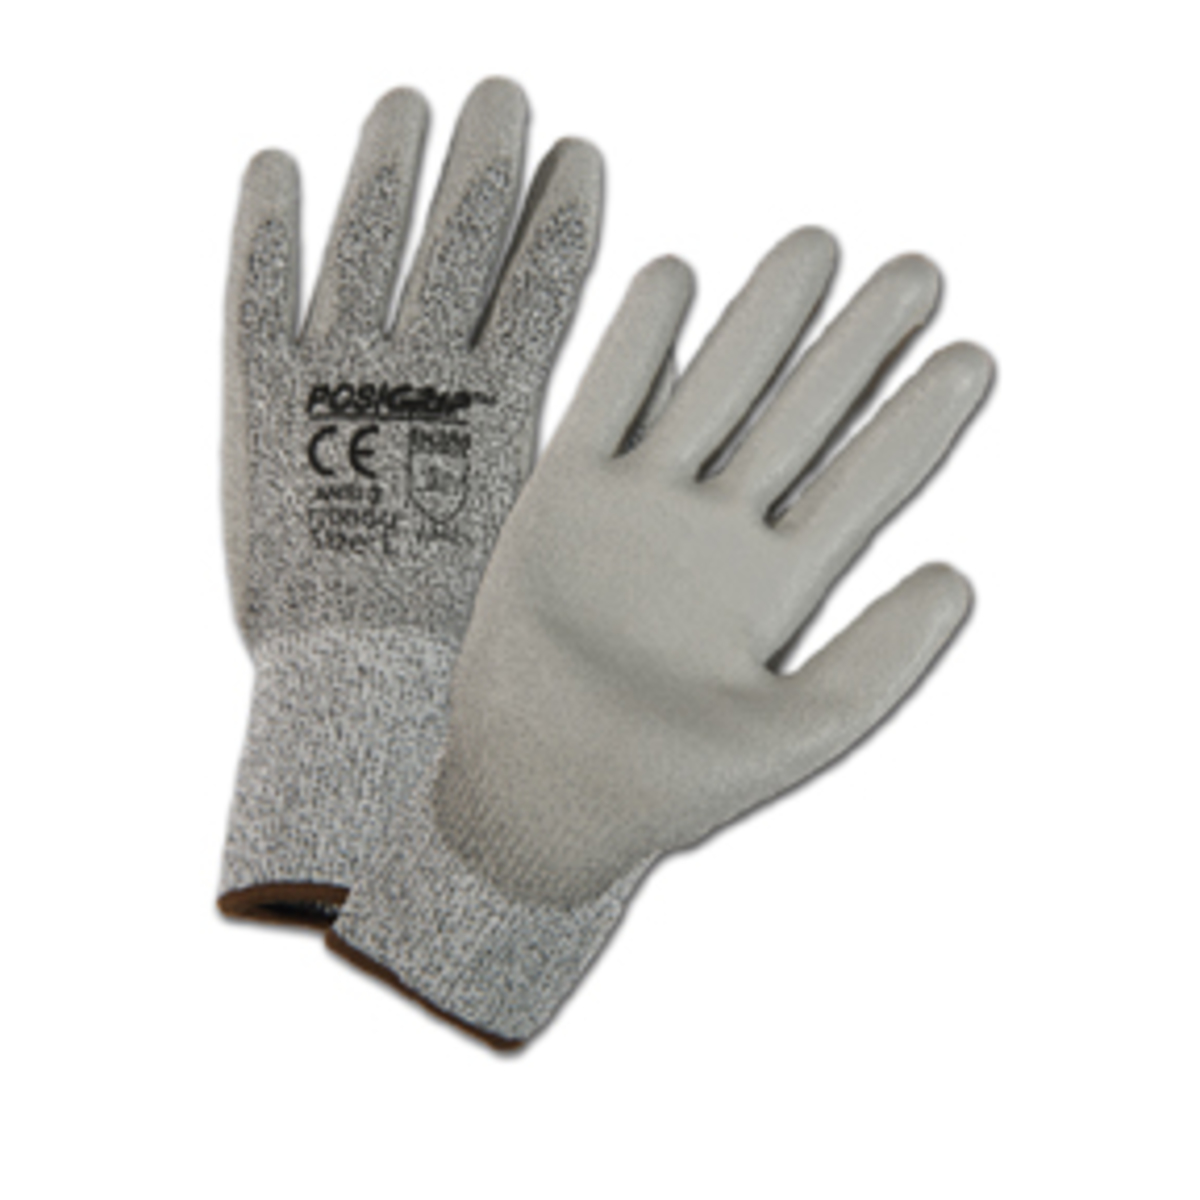 PIP® 3X PosiGrip® 13 Gauge High Performance Polyethylene Cut Resistant Gloves With Polyurethane Coating